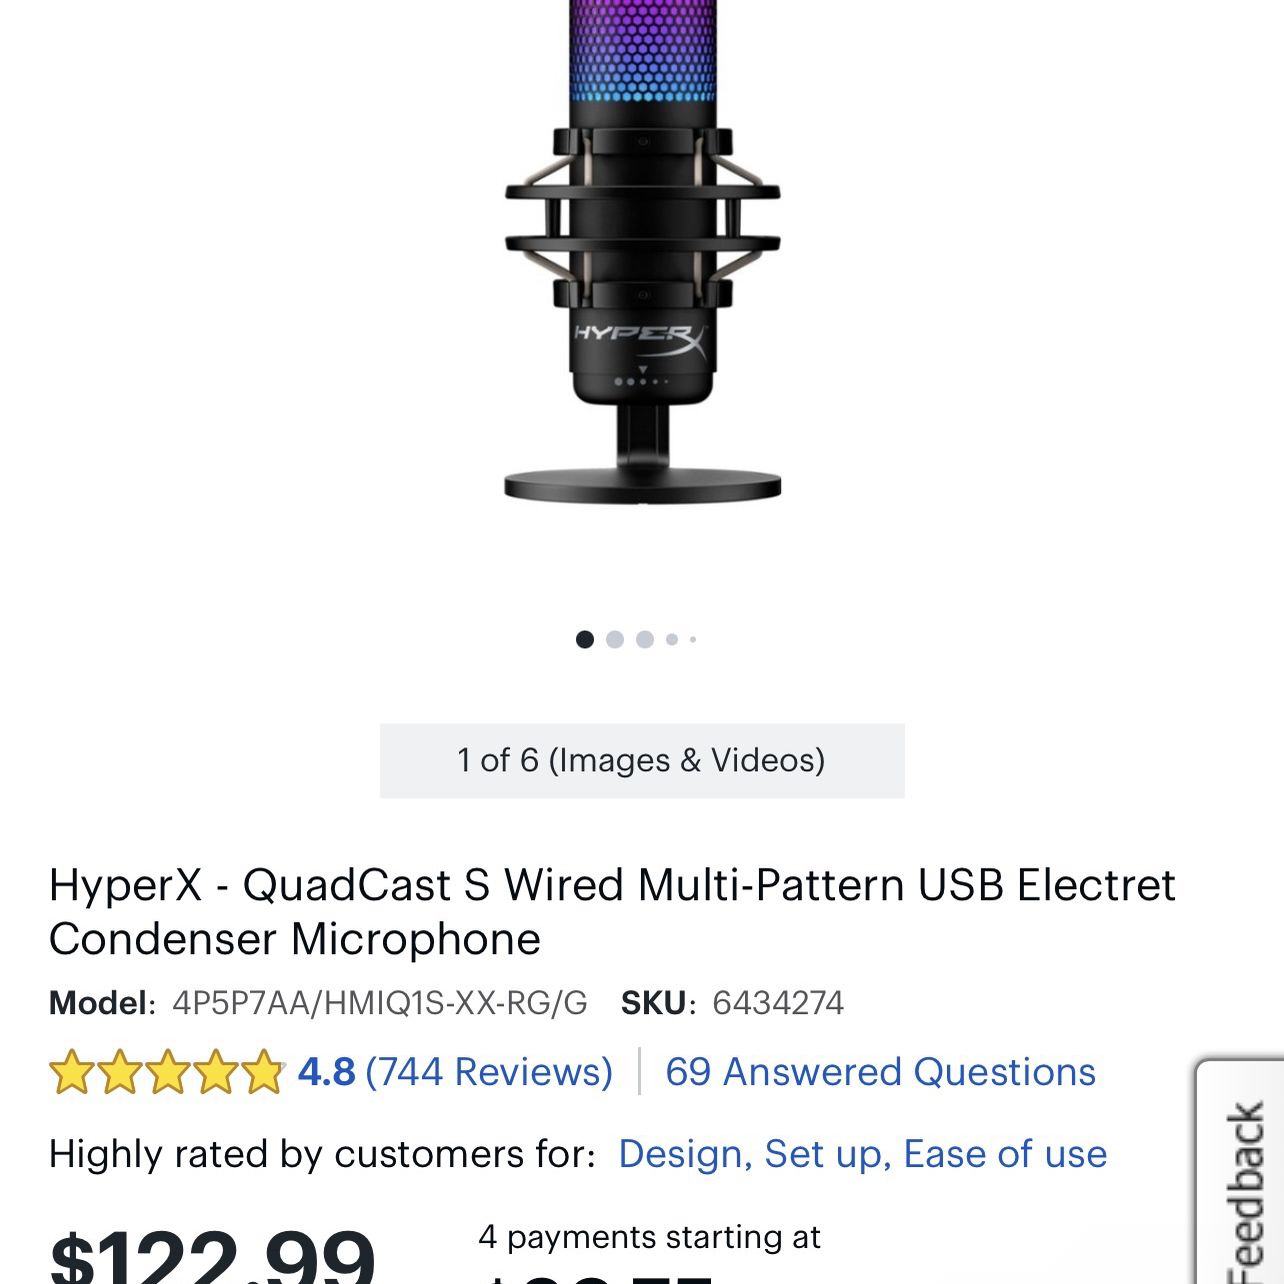 HyperX QuadCast S Wired Multi-Pattern USB Electret Condenser